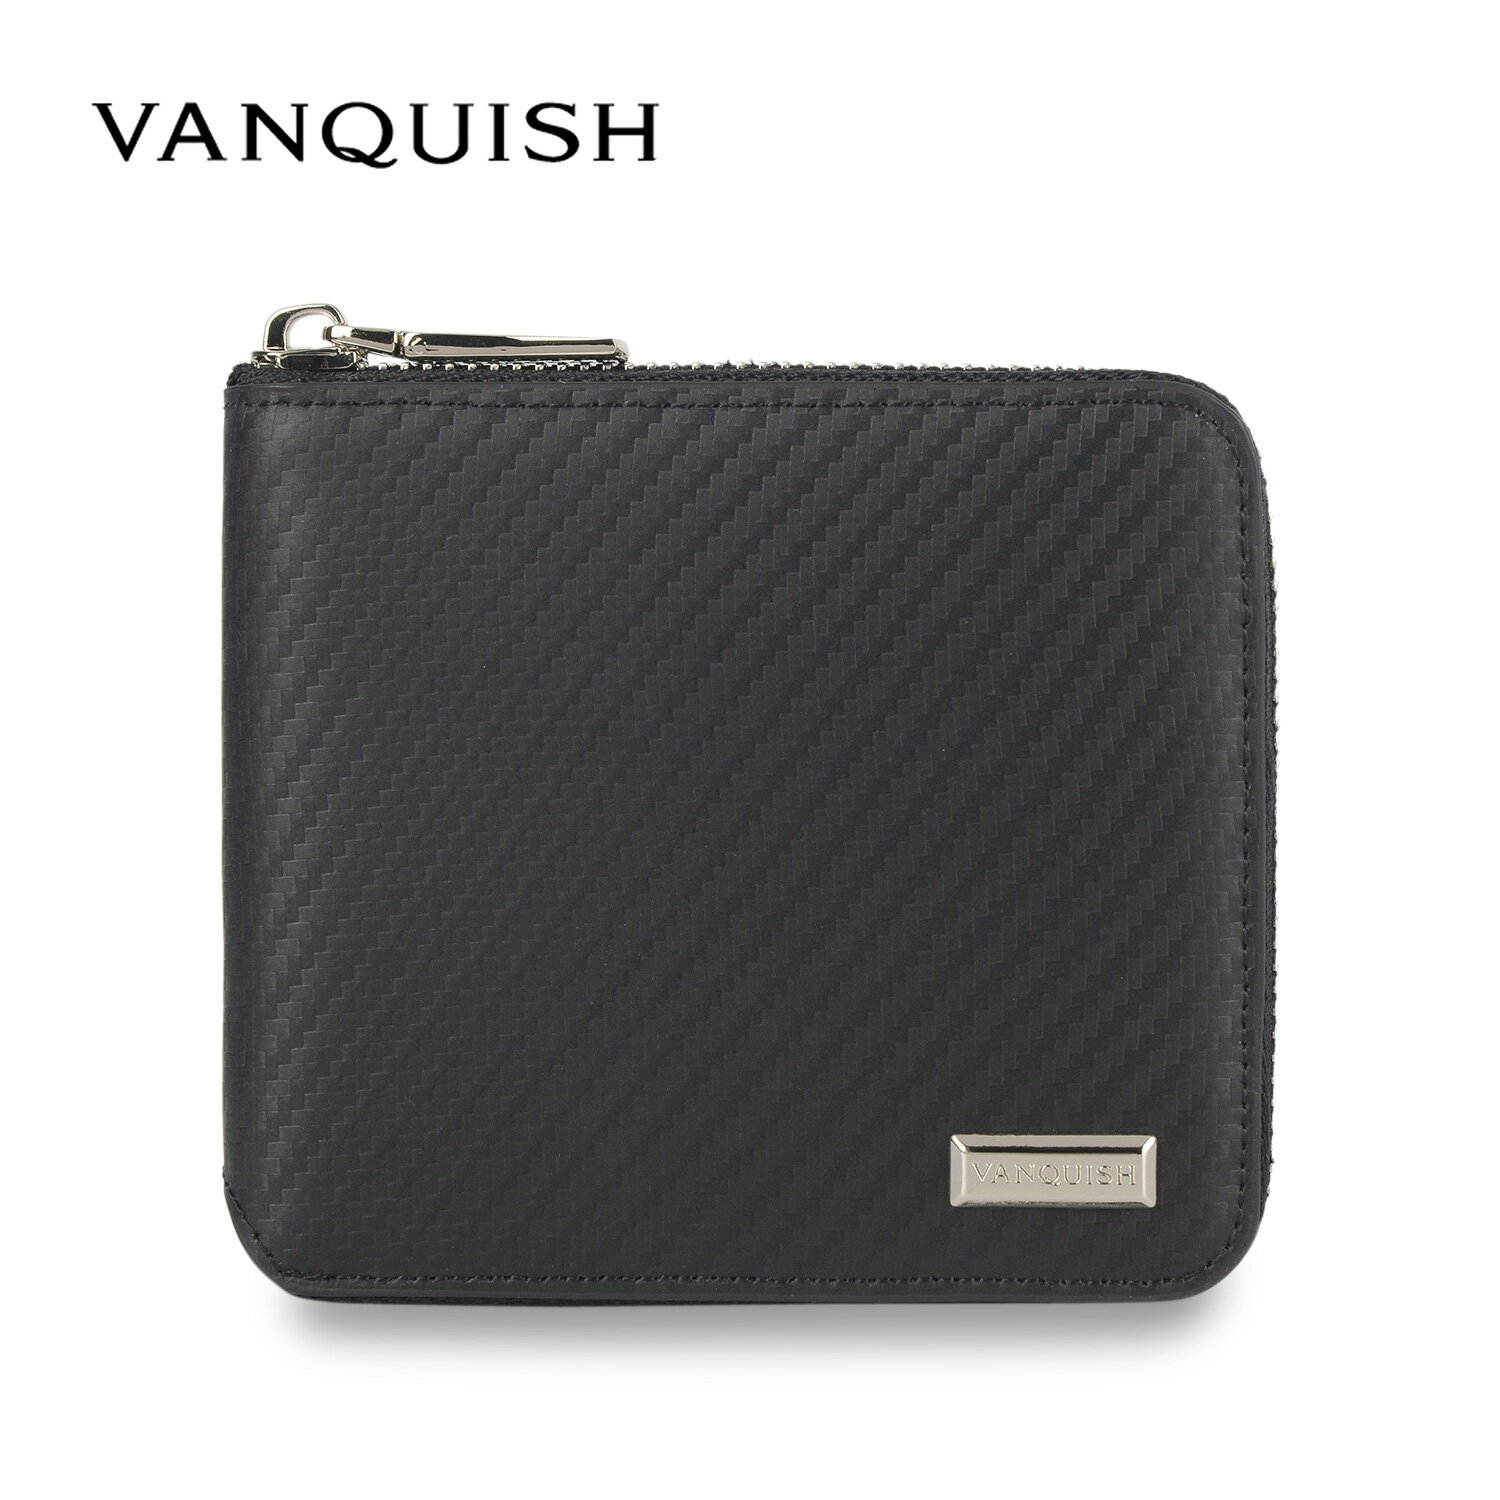 VANQUISH ヴァンキッシュ 二つ折り財布 メンズ 本革 ラウンドファスナー WALLET ブラック 黒 43240